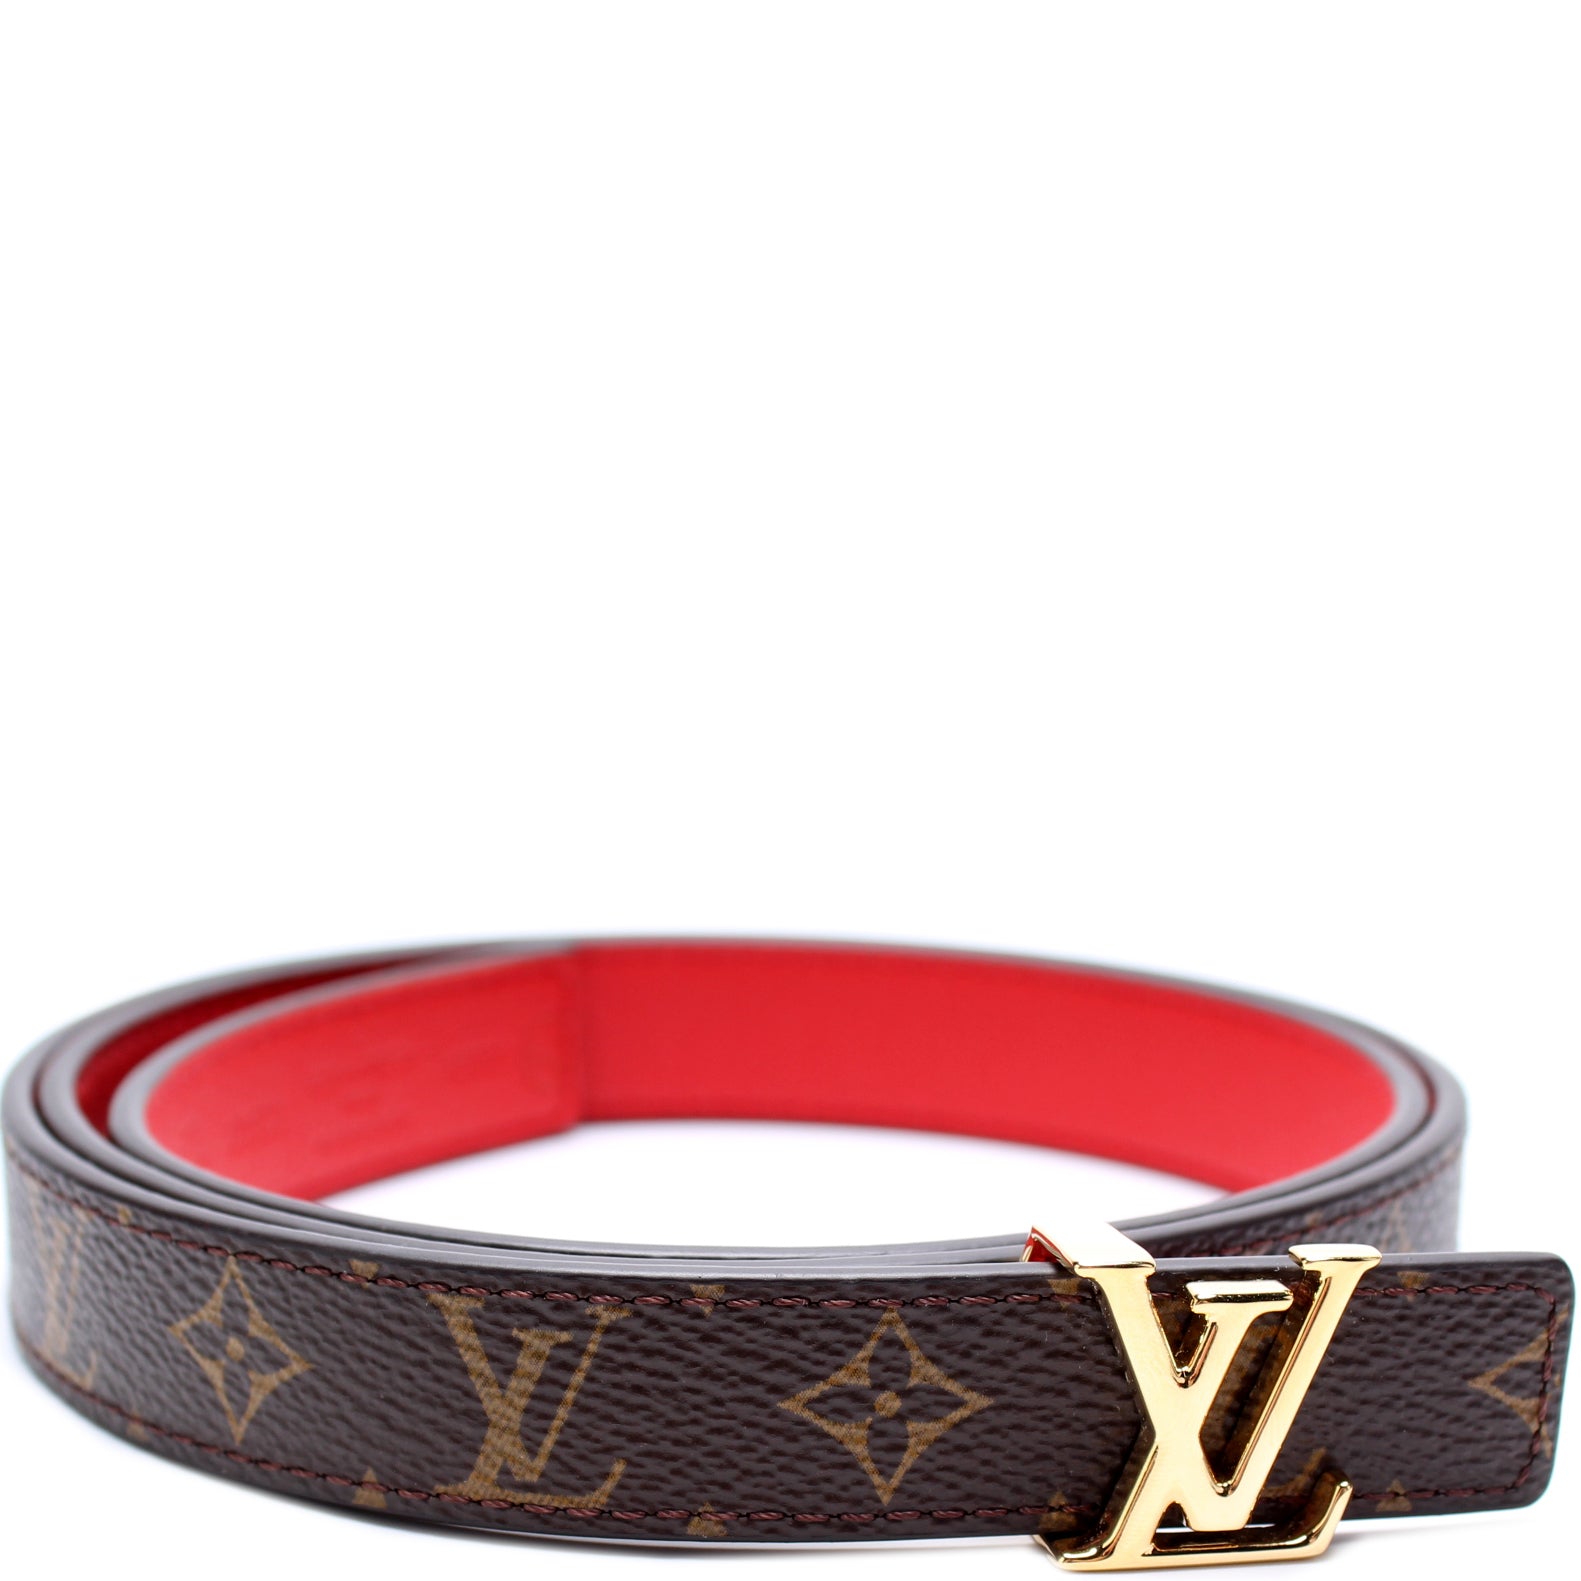 Louis Vuitton reversible monogram belt